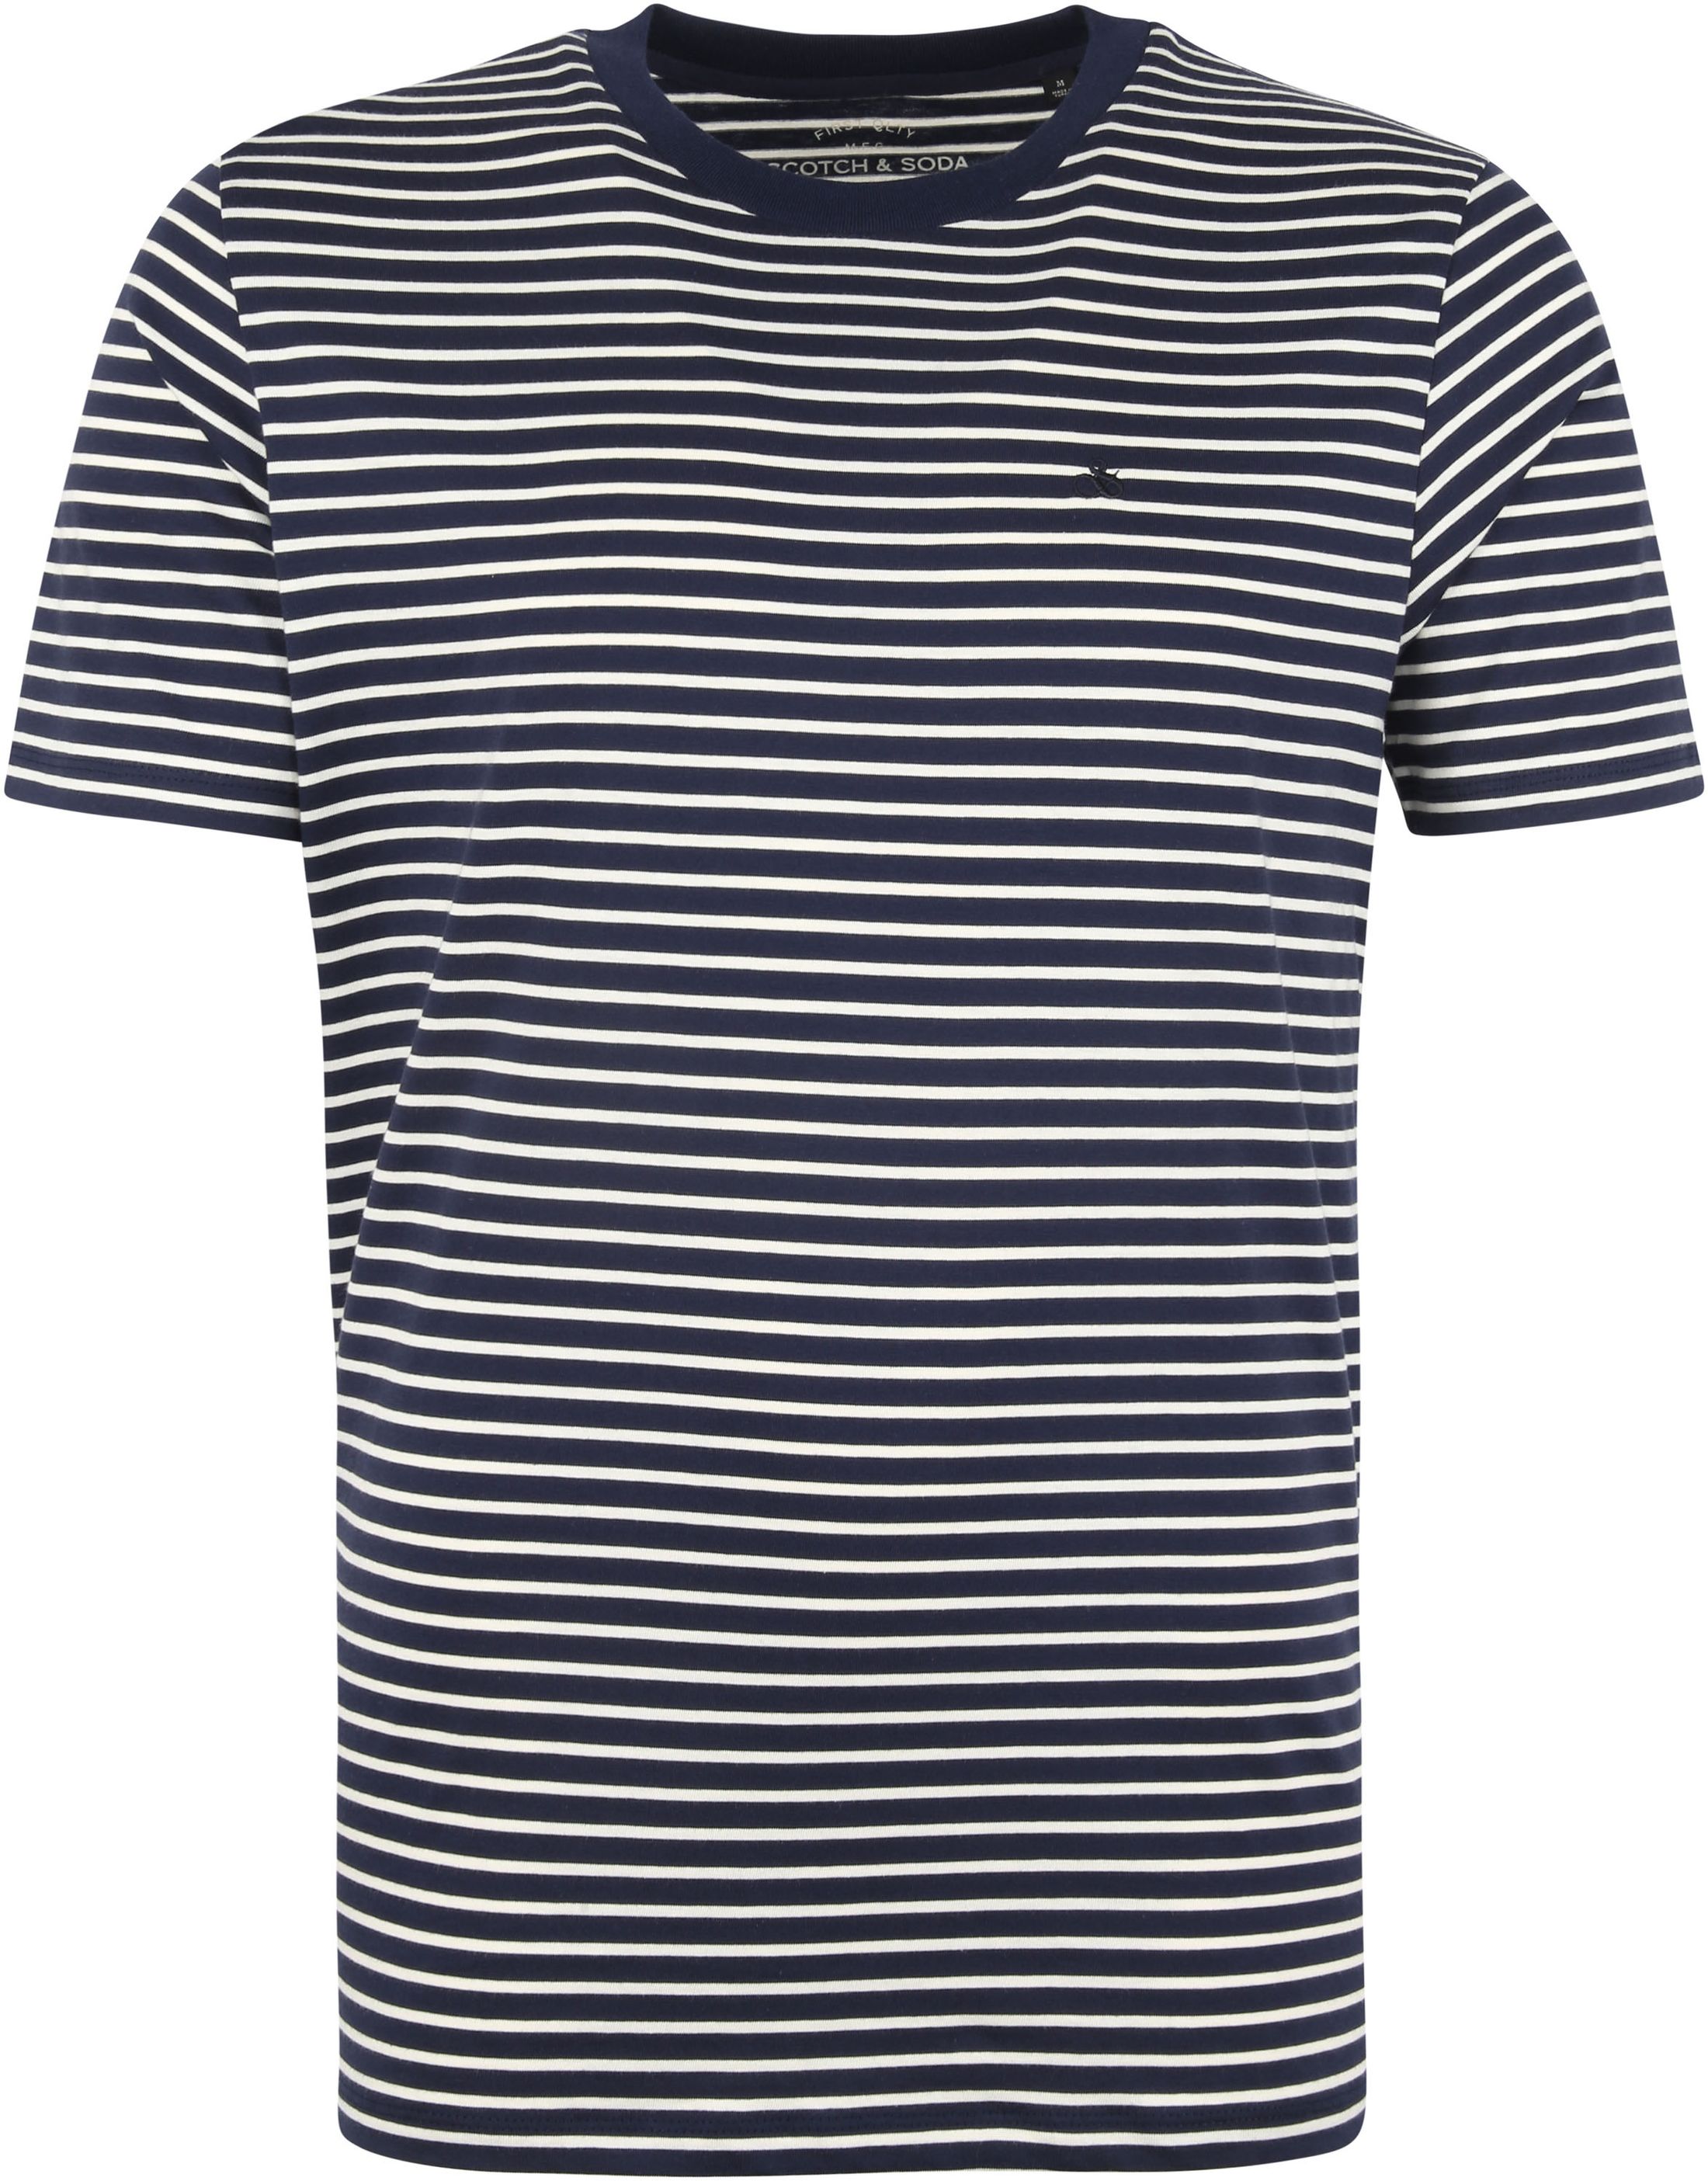 Scotch & Soda T-Shirt Stripes Jersey Navy Blue Dark Blue size XL